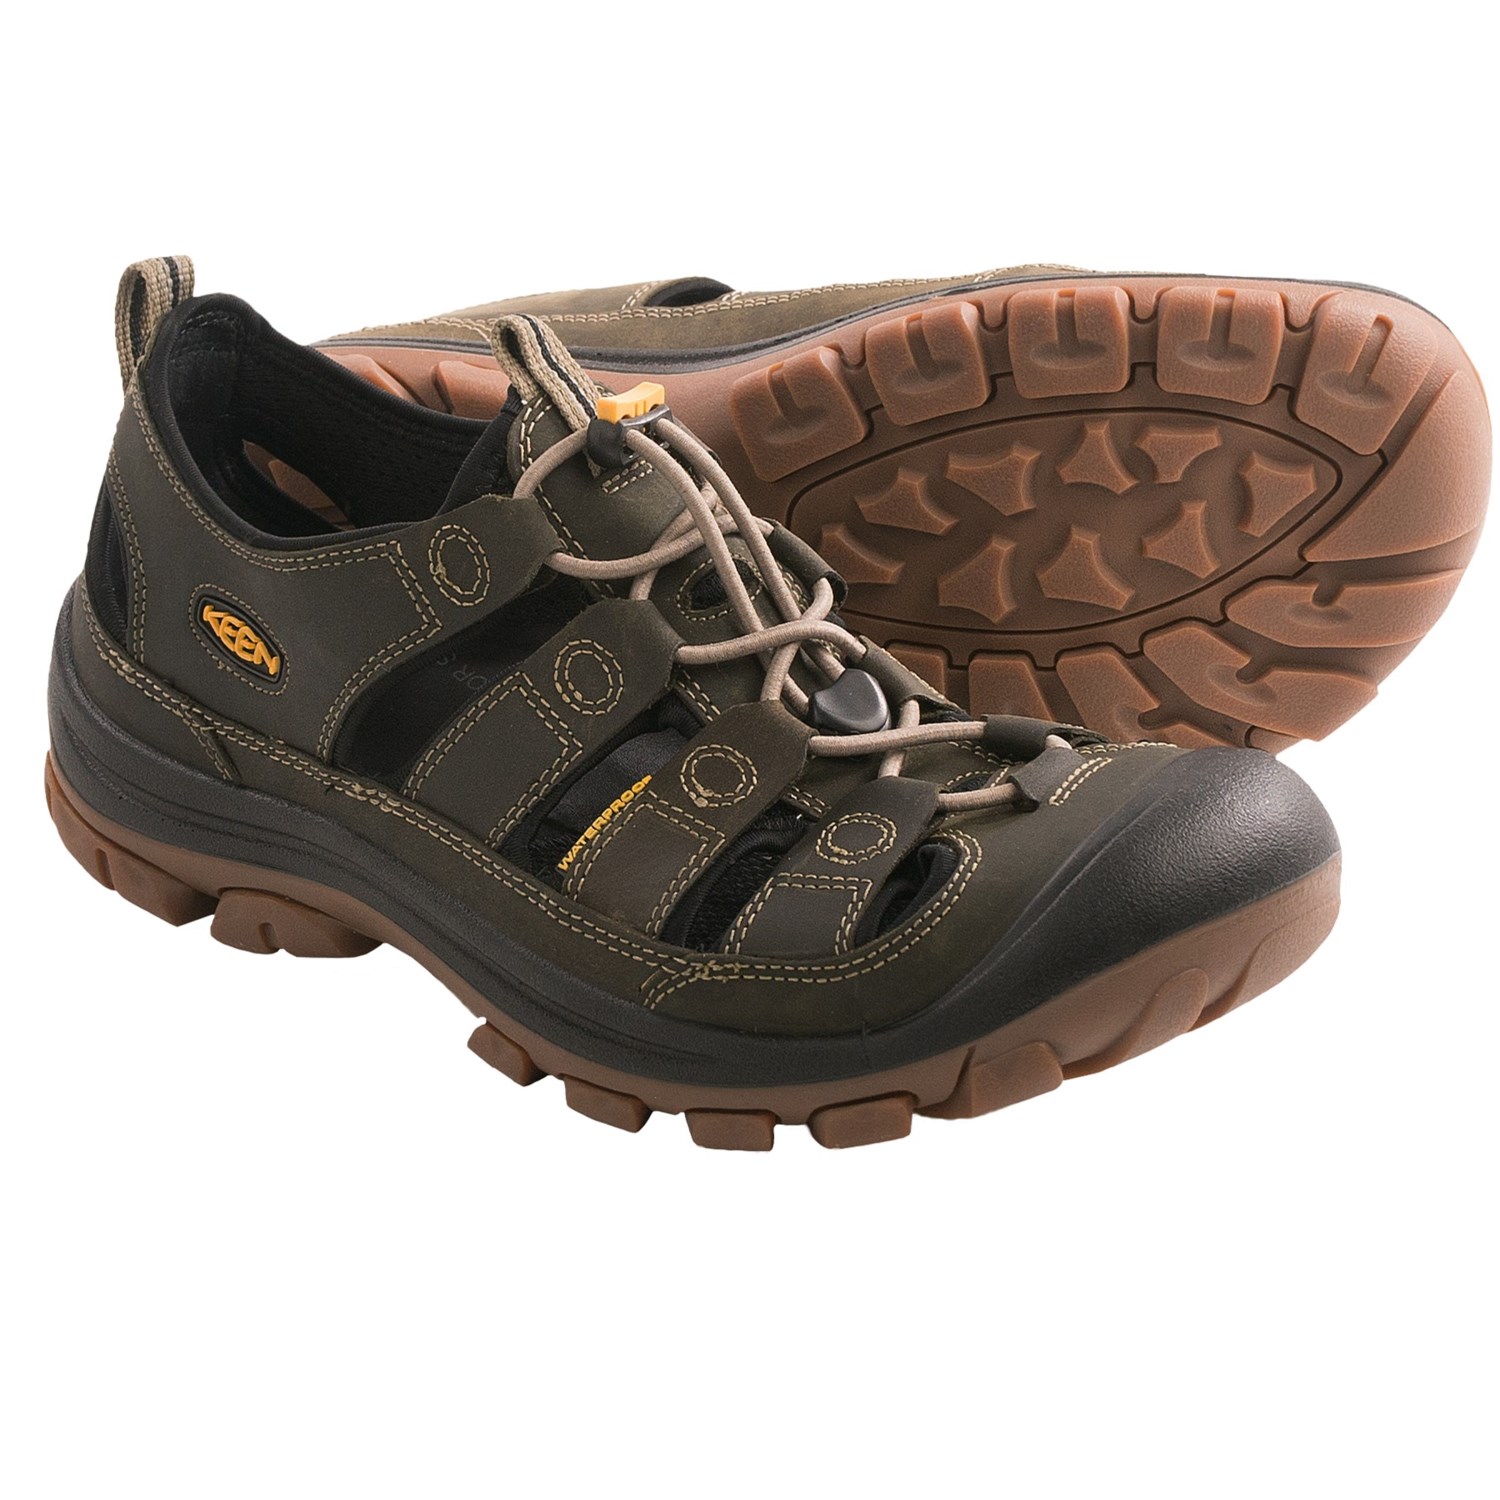 Keen Glisan Sport Sandals (For Men) in Brindle